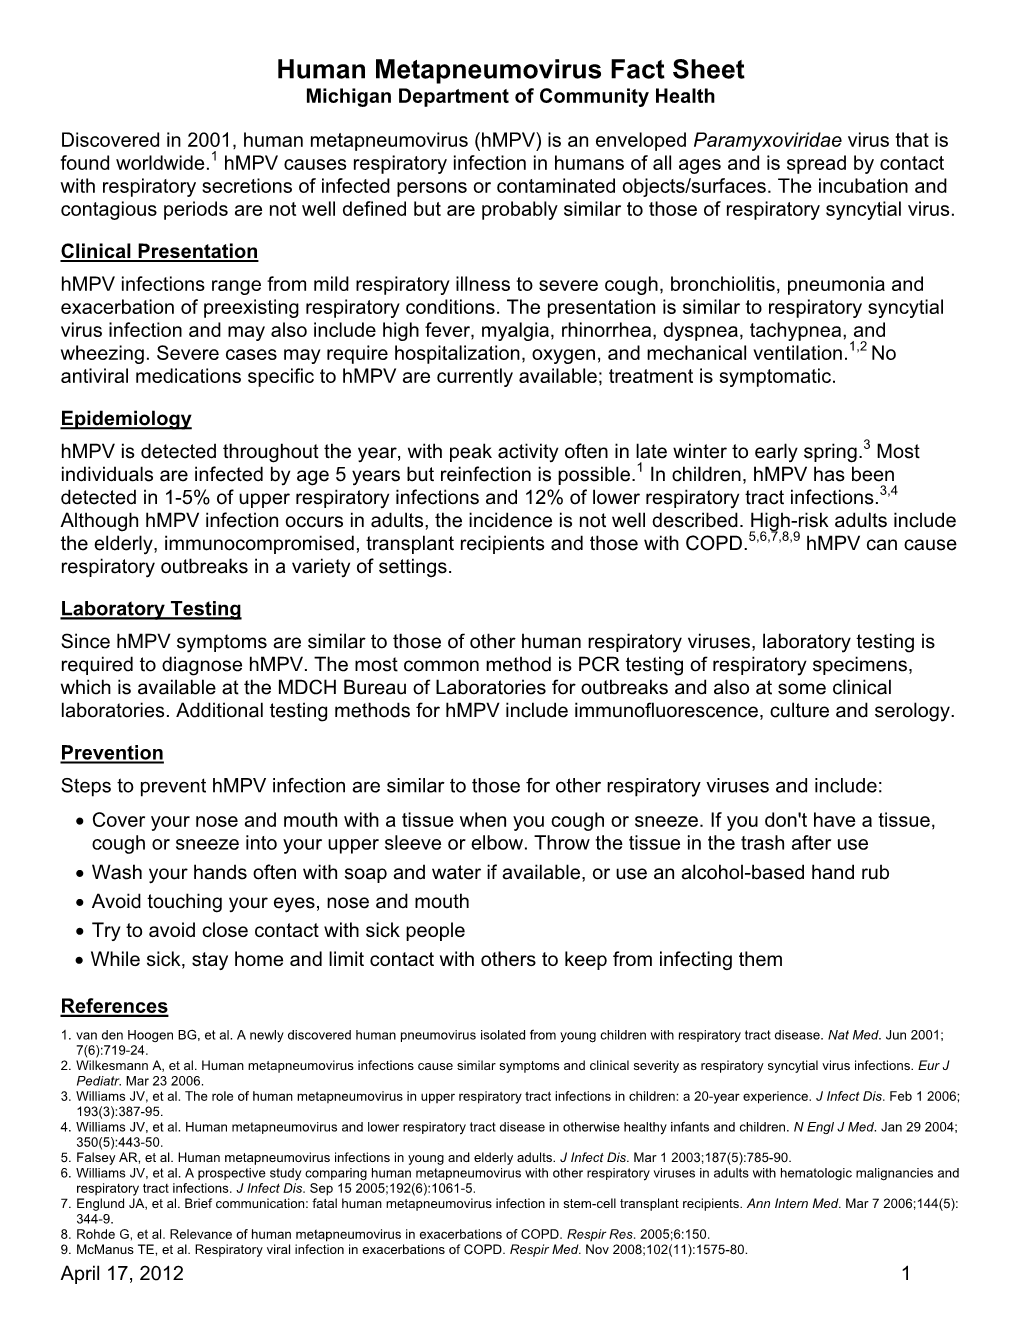 Human Metapneumovirus Fact Sheet Michigan Department of Community Health